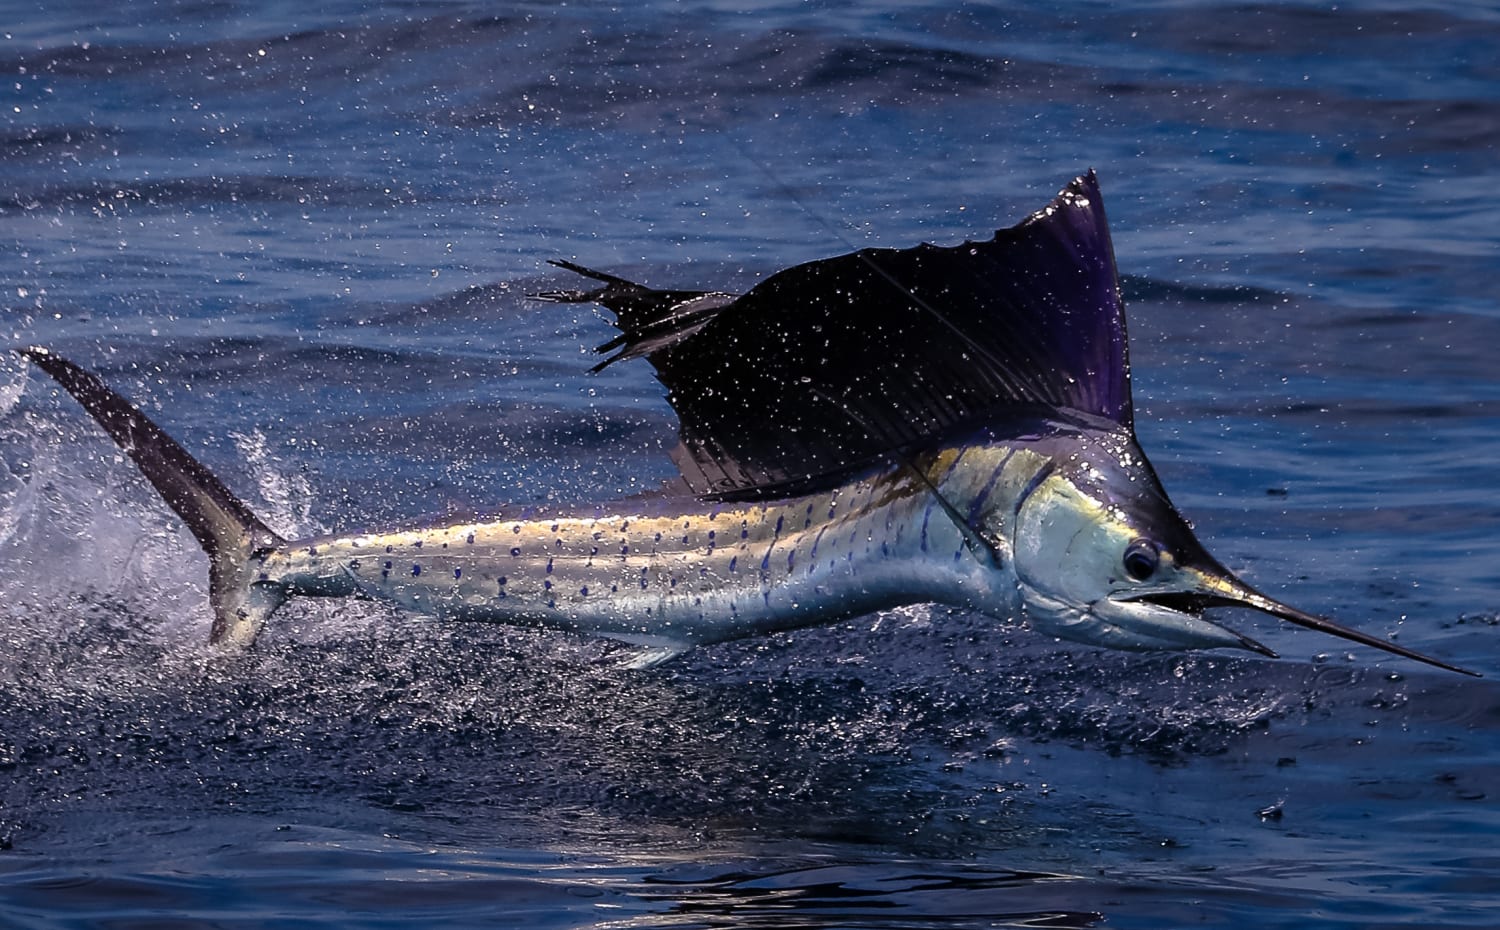 https://media-cldnry.s-nbcnews.com/image/upload/rockcms/2022-07/220725-sailfish-se-717a-a6142d.jpg